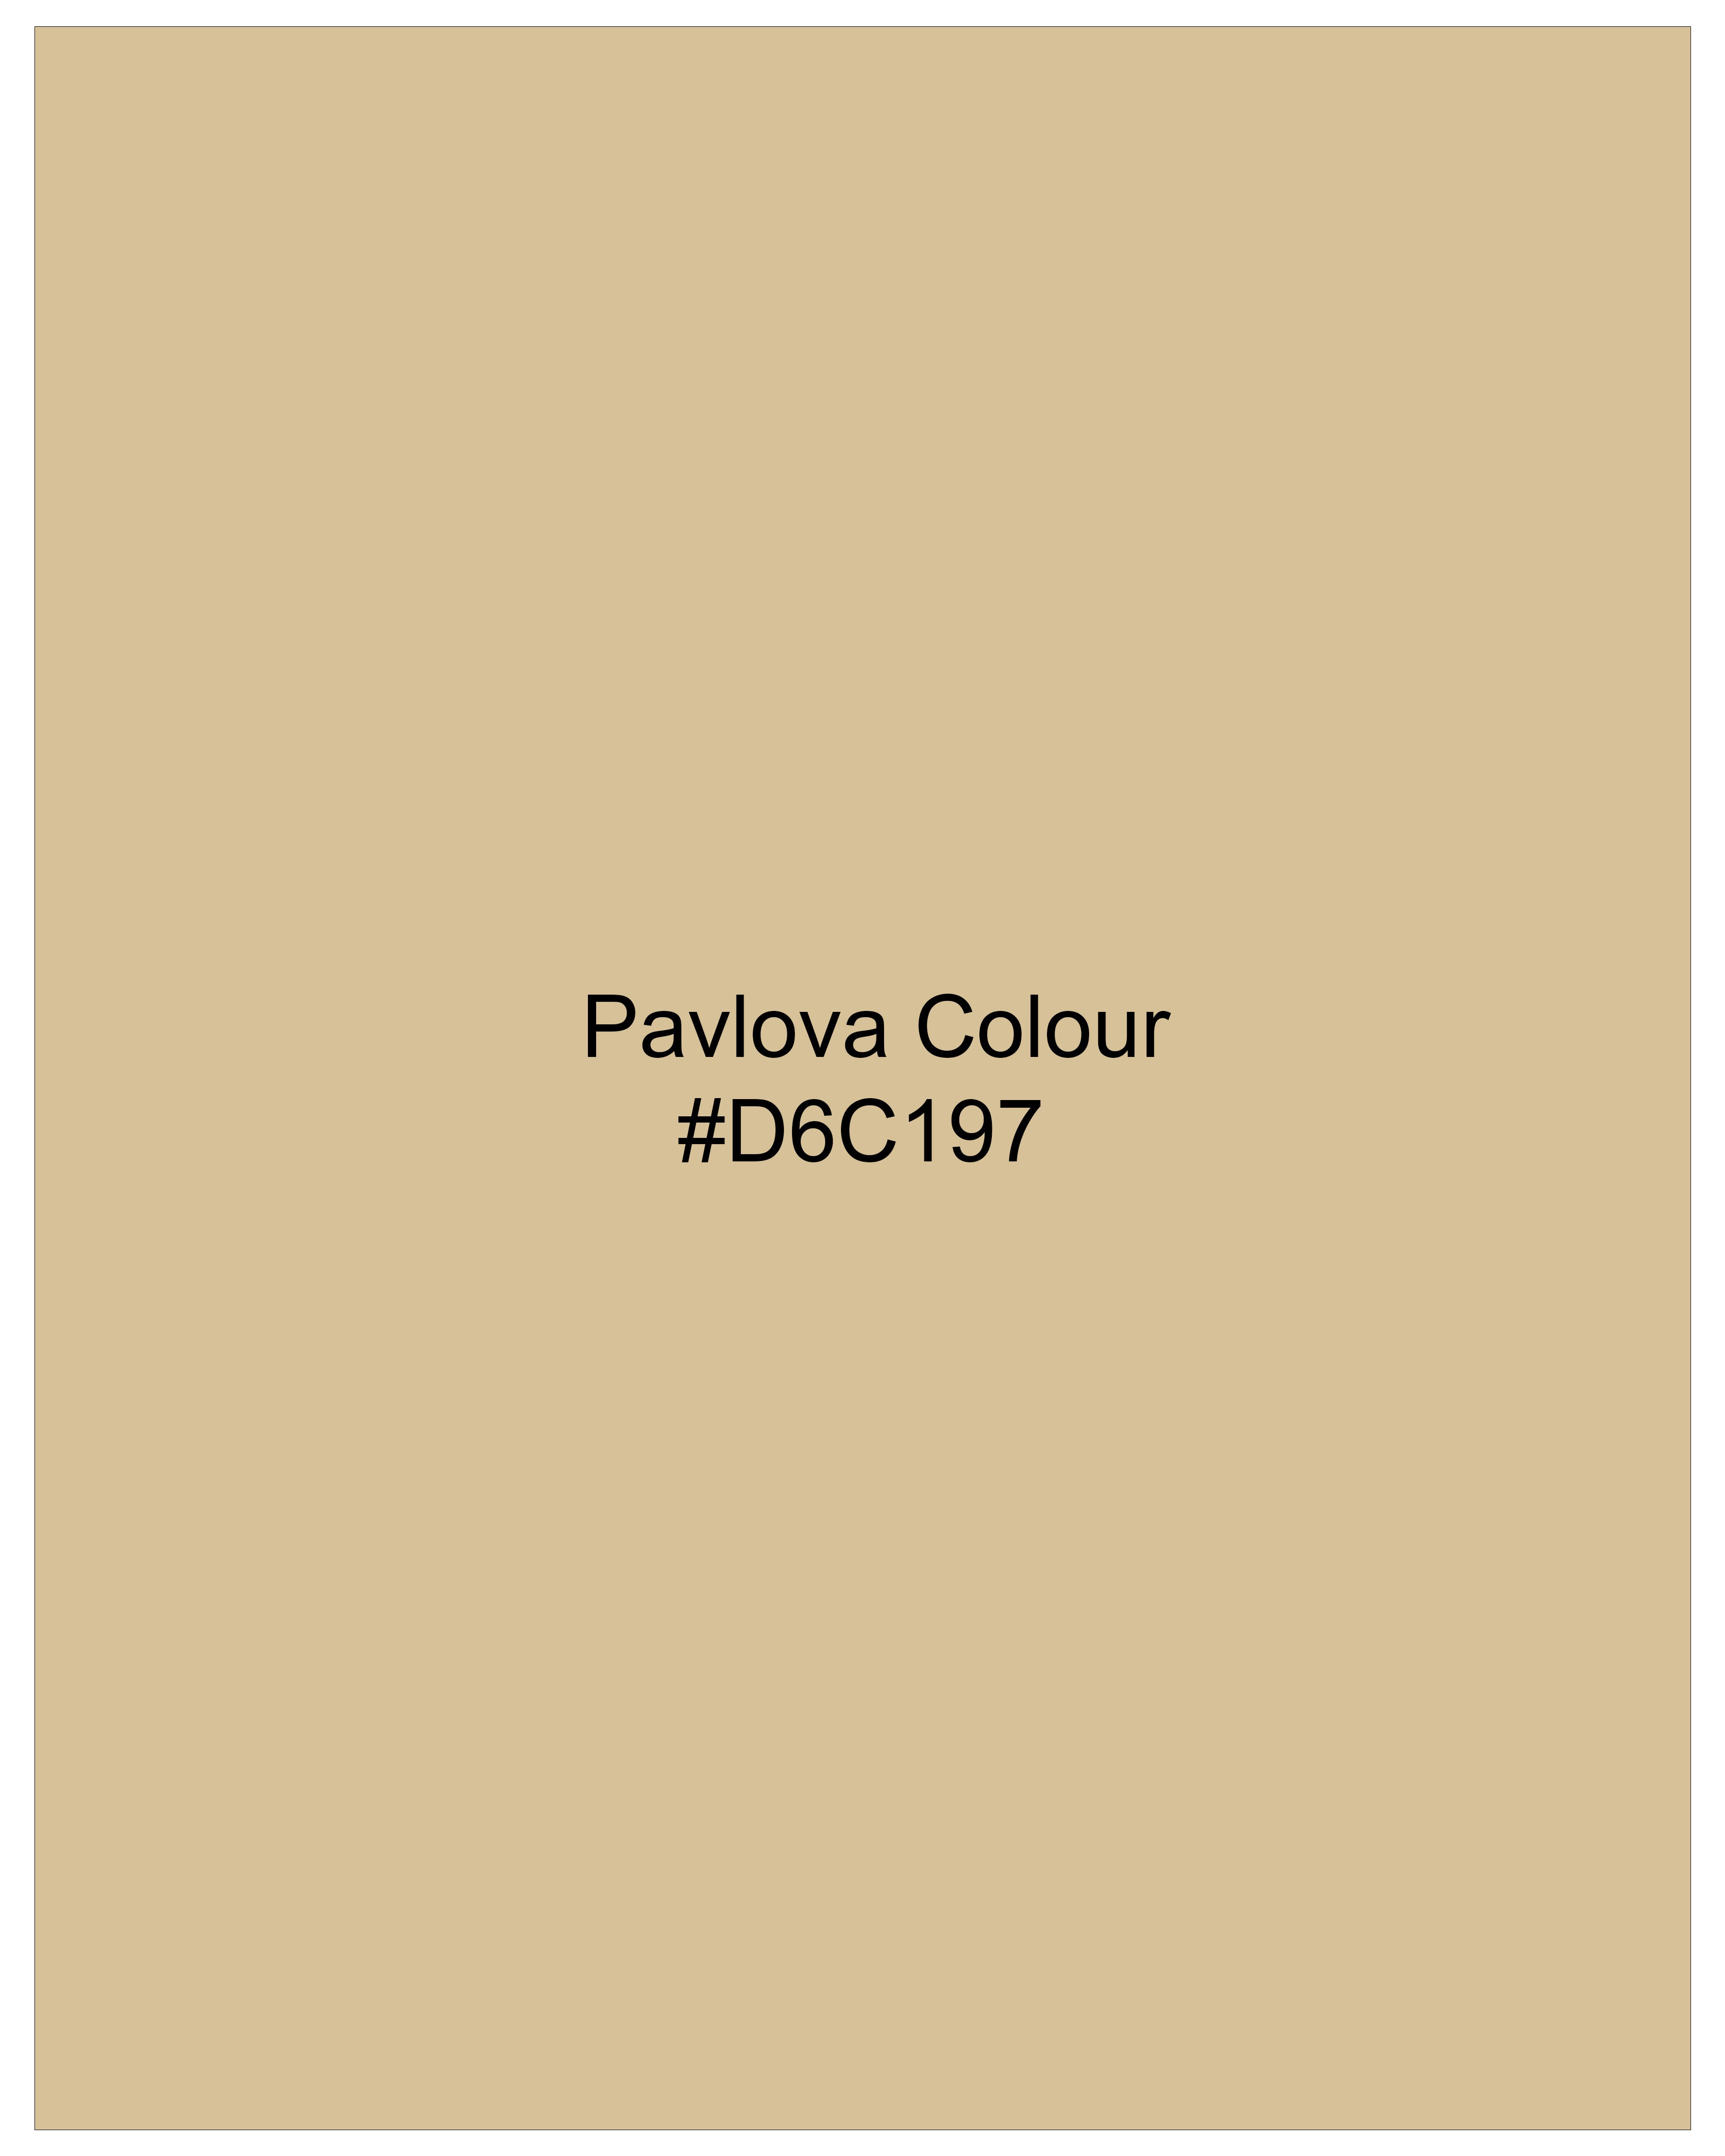 Pavlova Cream Solid Premium Cotton Stretchable Traveler Suit ST2647-SB-36, ST2647-SB-38, ST2647-SB-40, ST2647-SB-42, ST2647-SB-44, ST2647-SB-46, ST2647-SB-48, ST2647-SB-50, ST2647-SB-52, ST2647-SB-54, ST2647-SB-56, ST2647-SB-58, ST2647-SB-60